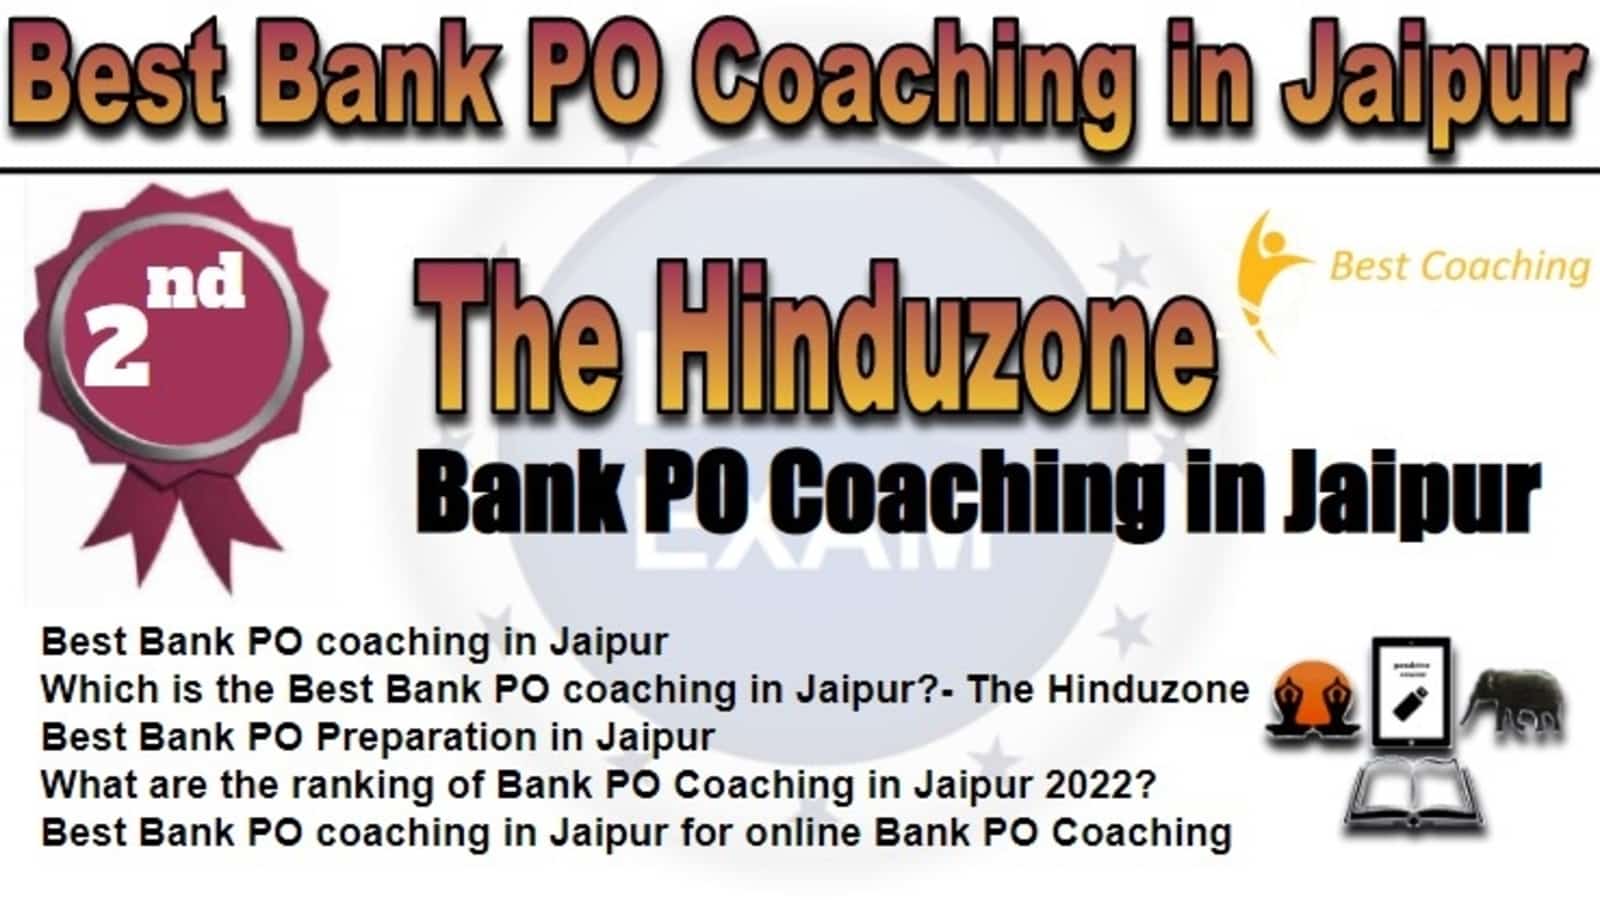 Rank 2 Best Bank PO Coaching in Jaipur